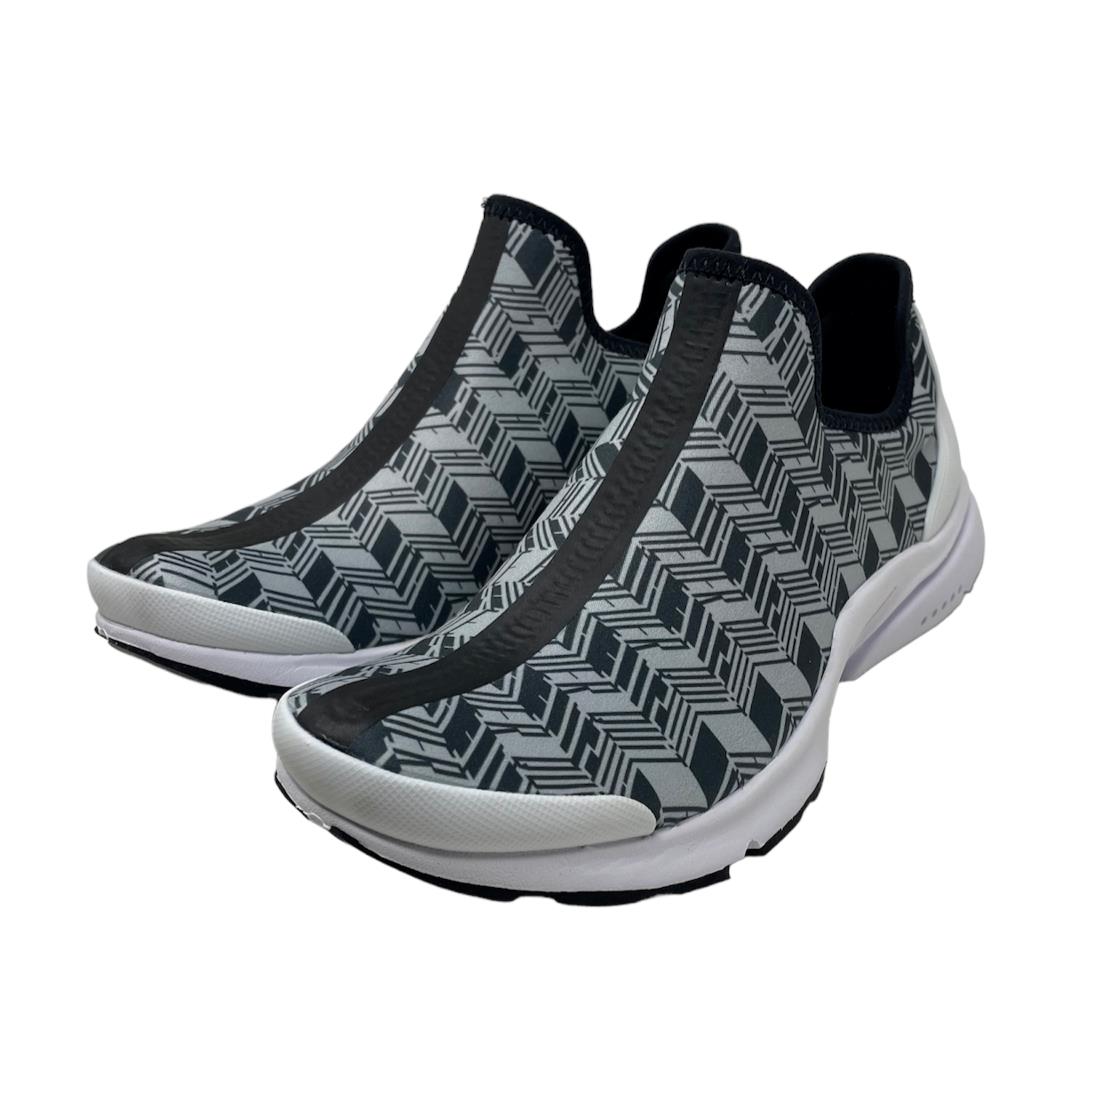 Mens Nike Air Presto X DB Running Shoes Size 5.5 US AJ8651 600 - Multicolor